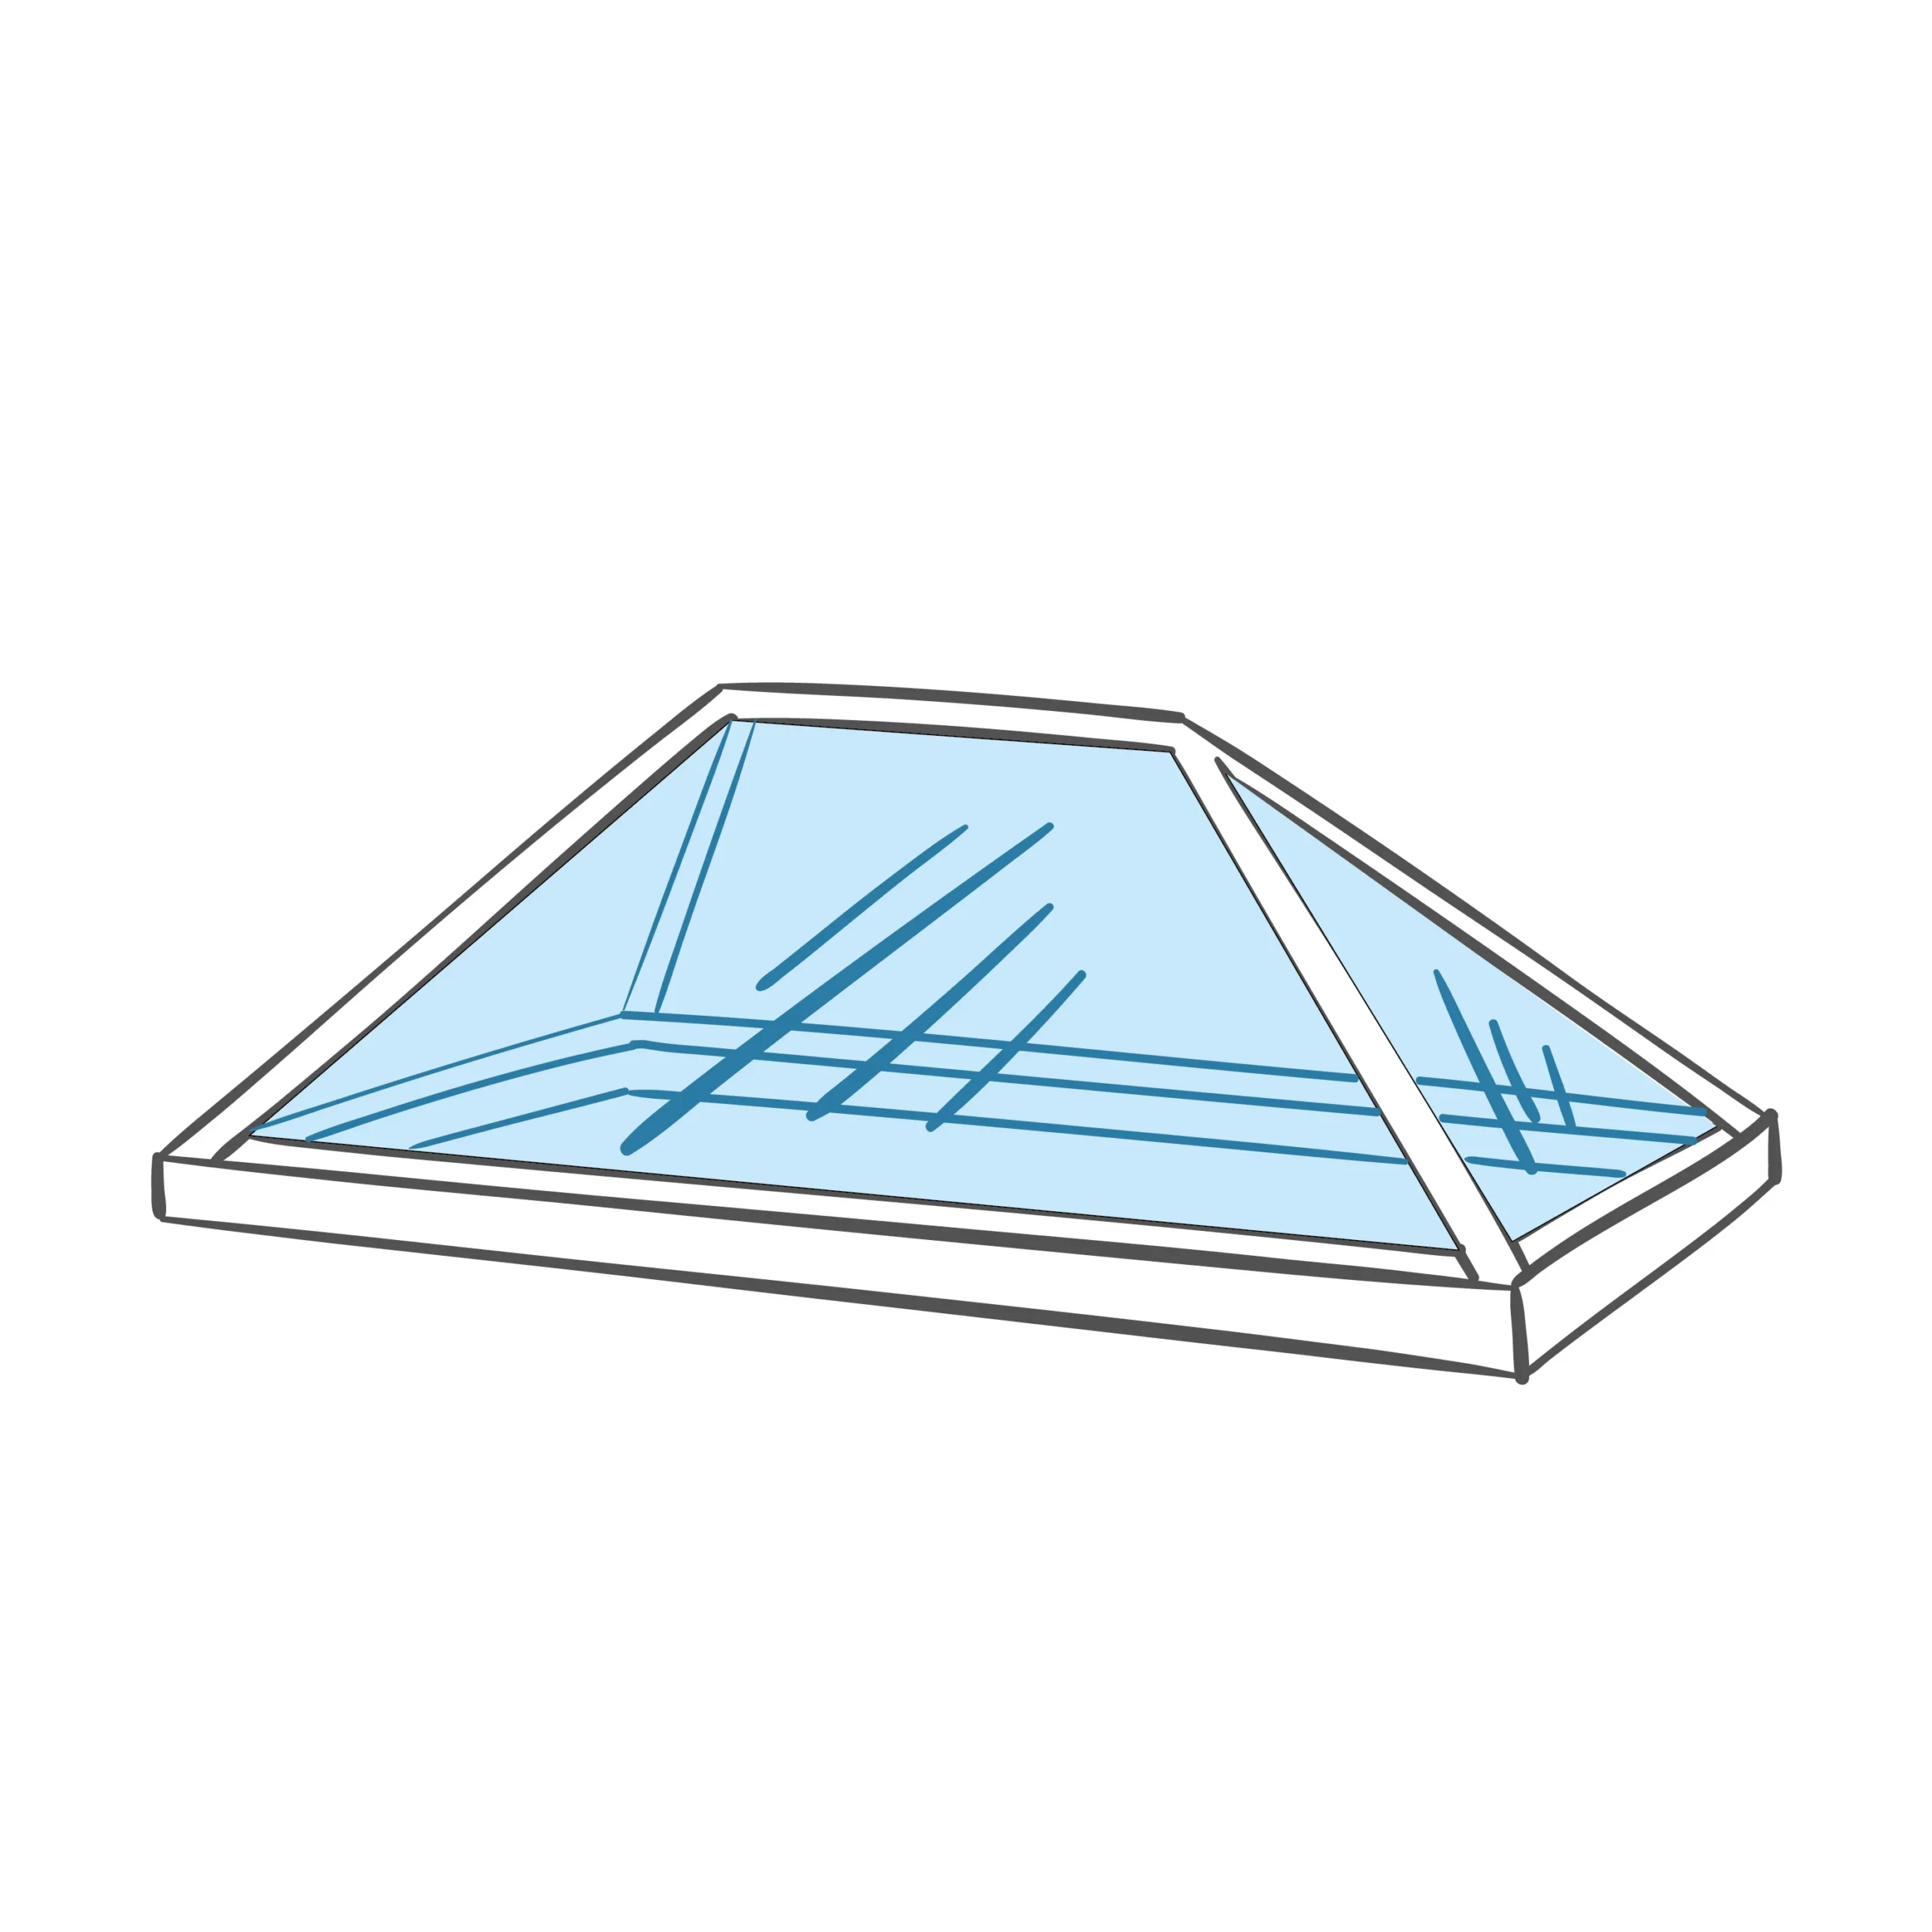 Glass-roof